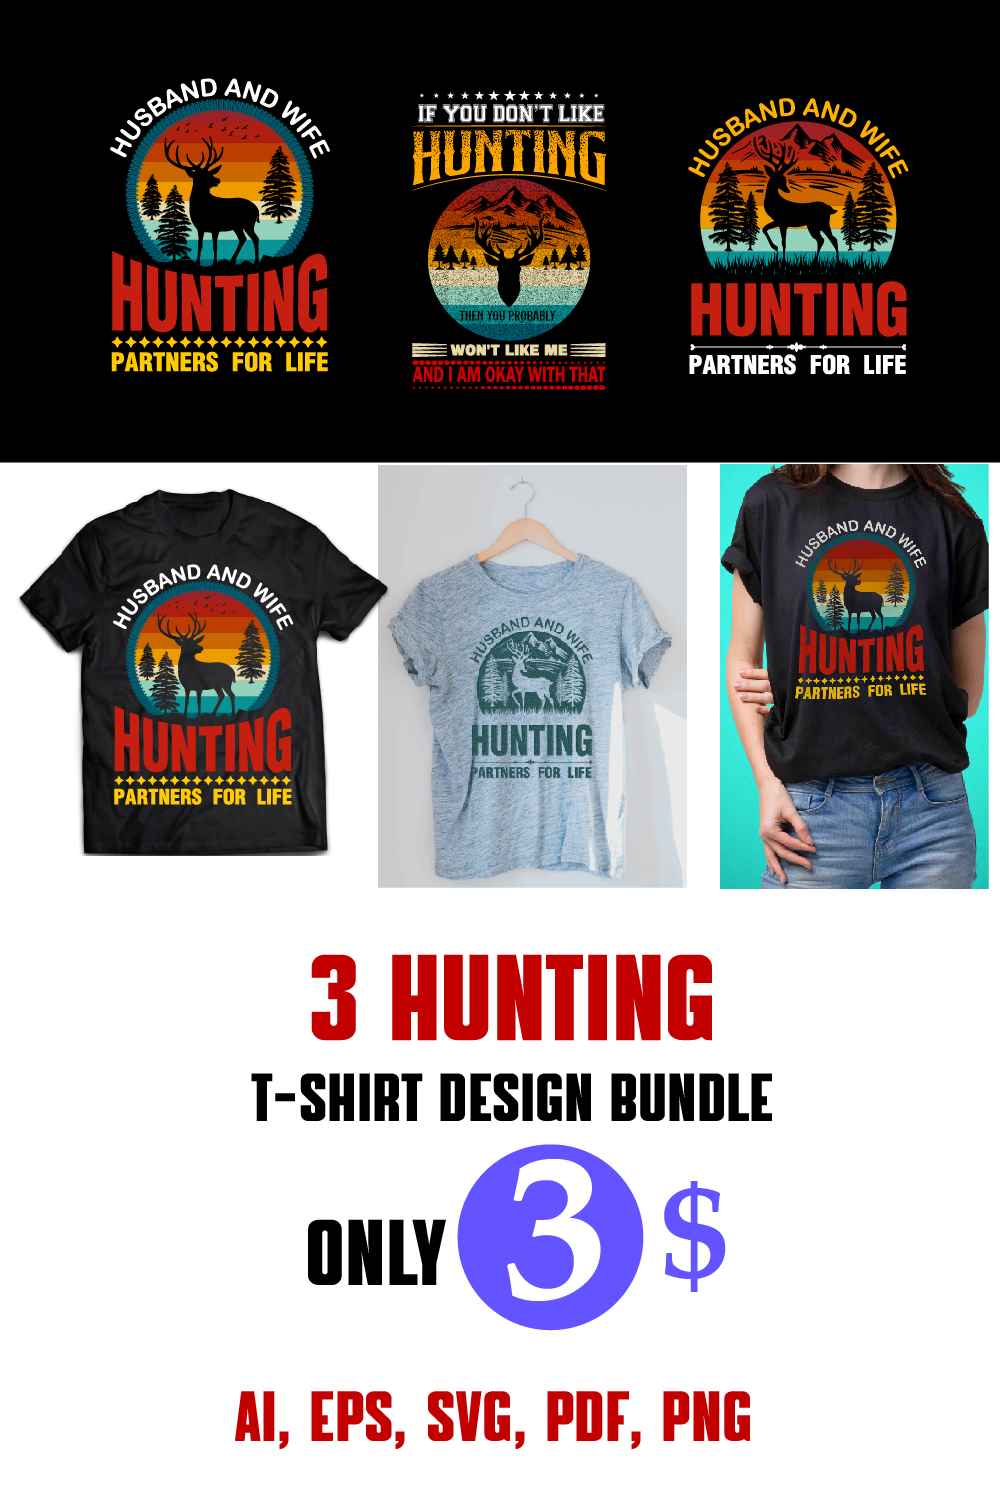 Hunting T-shirt Design Bundles Pinterest image.